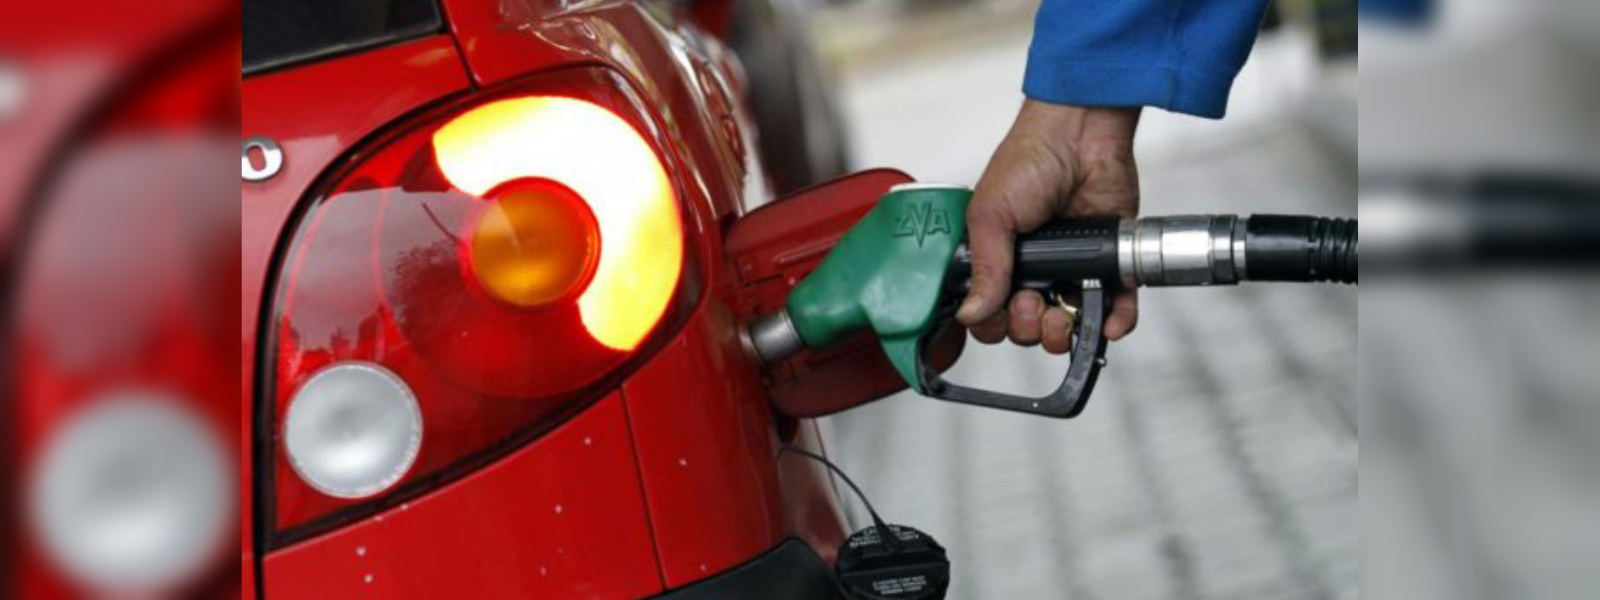 Price Revision of 95 Octane petrol & Super diesel